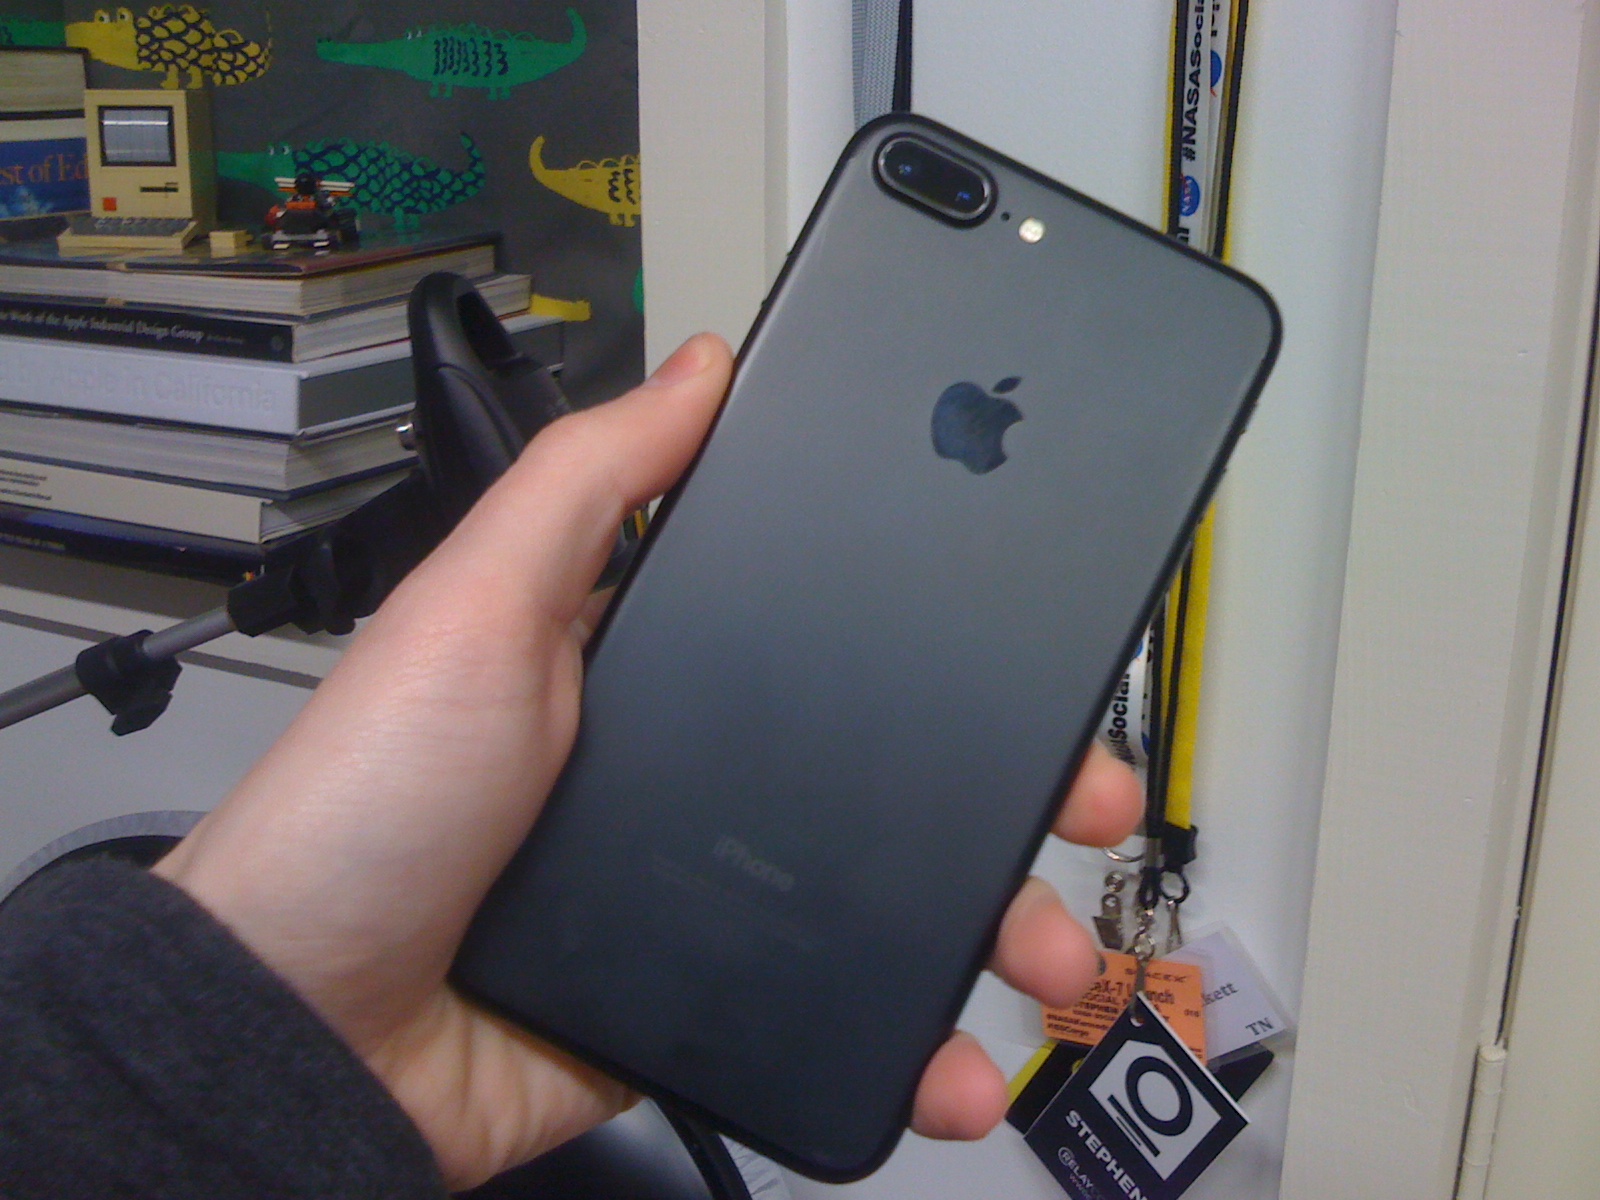 iPhone 7 Plus, taken with original